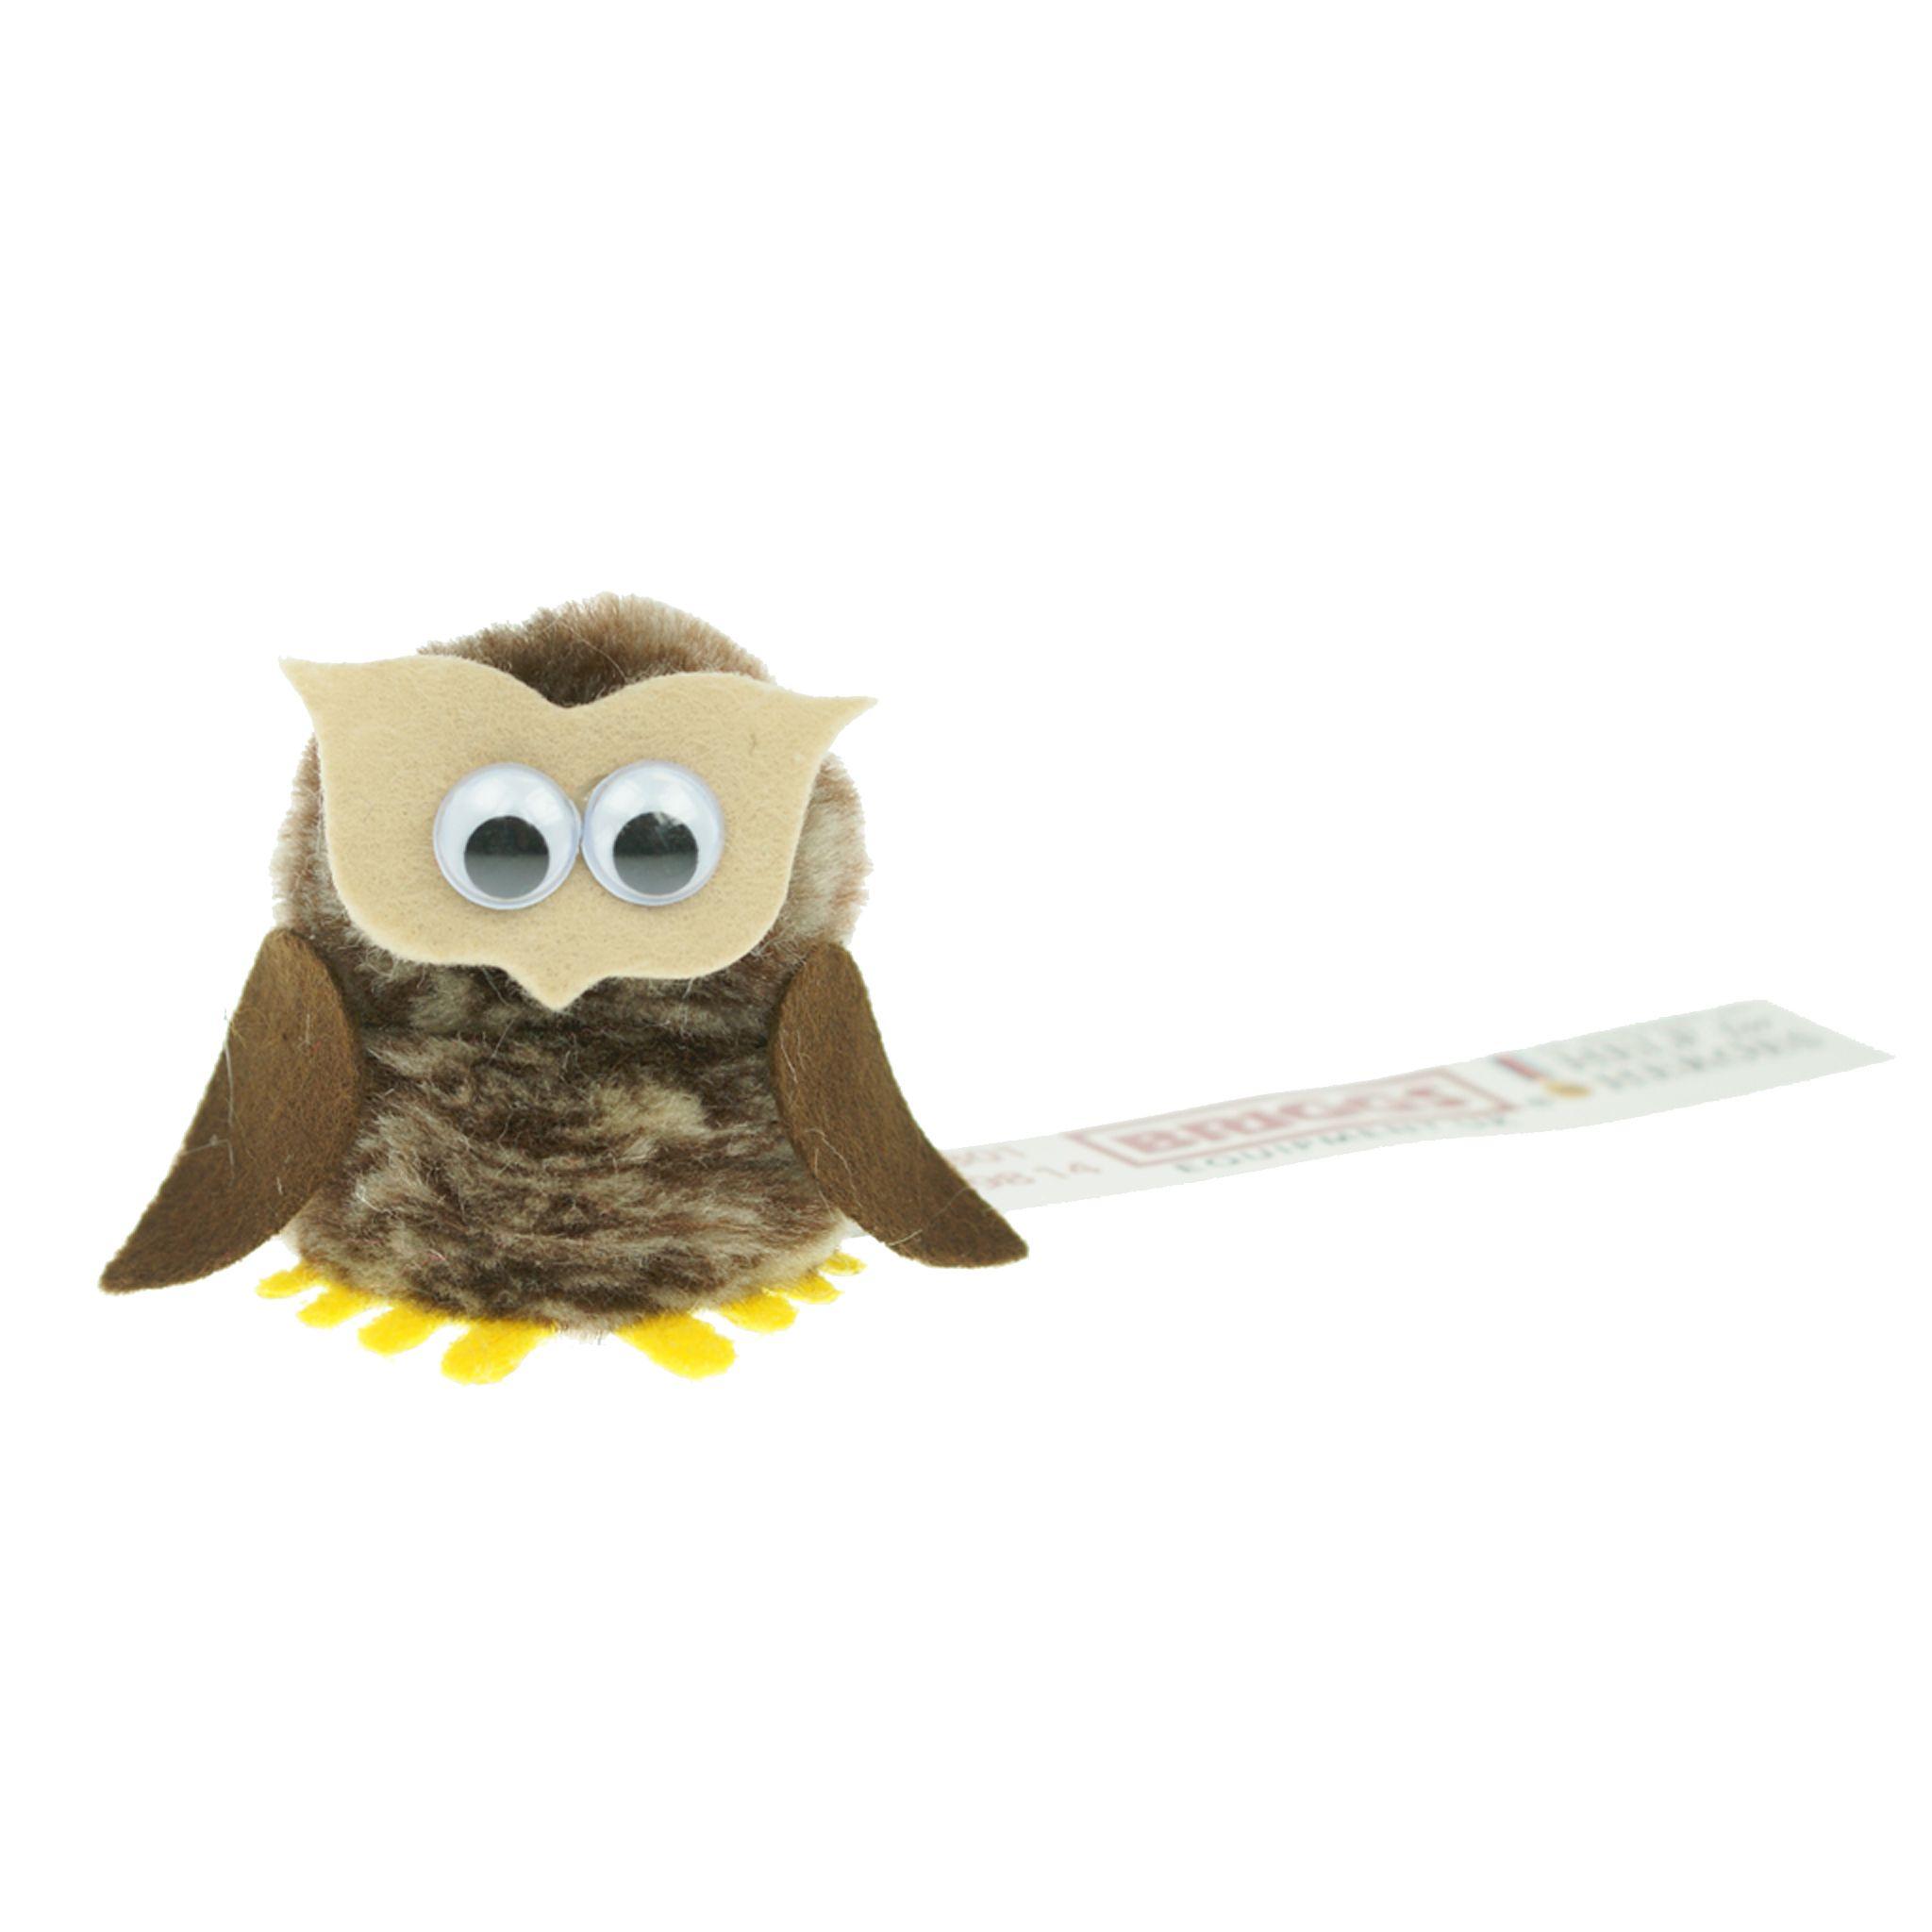 Owl Feet Logo - Animal Logo Bugs Owl Promotional Products UK. Corporate Gifts